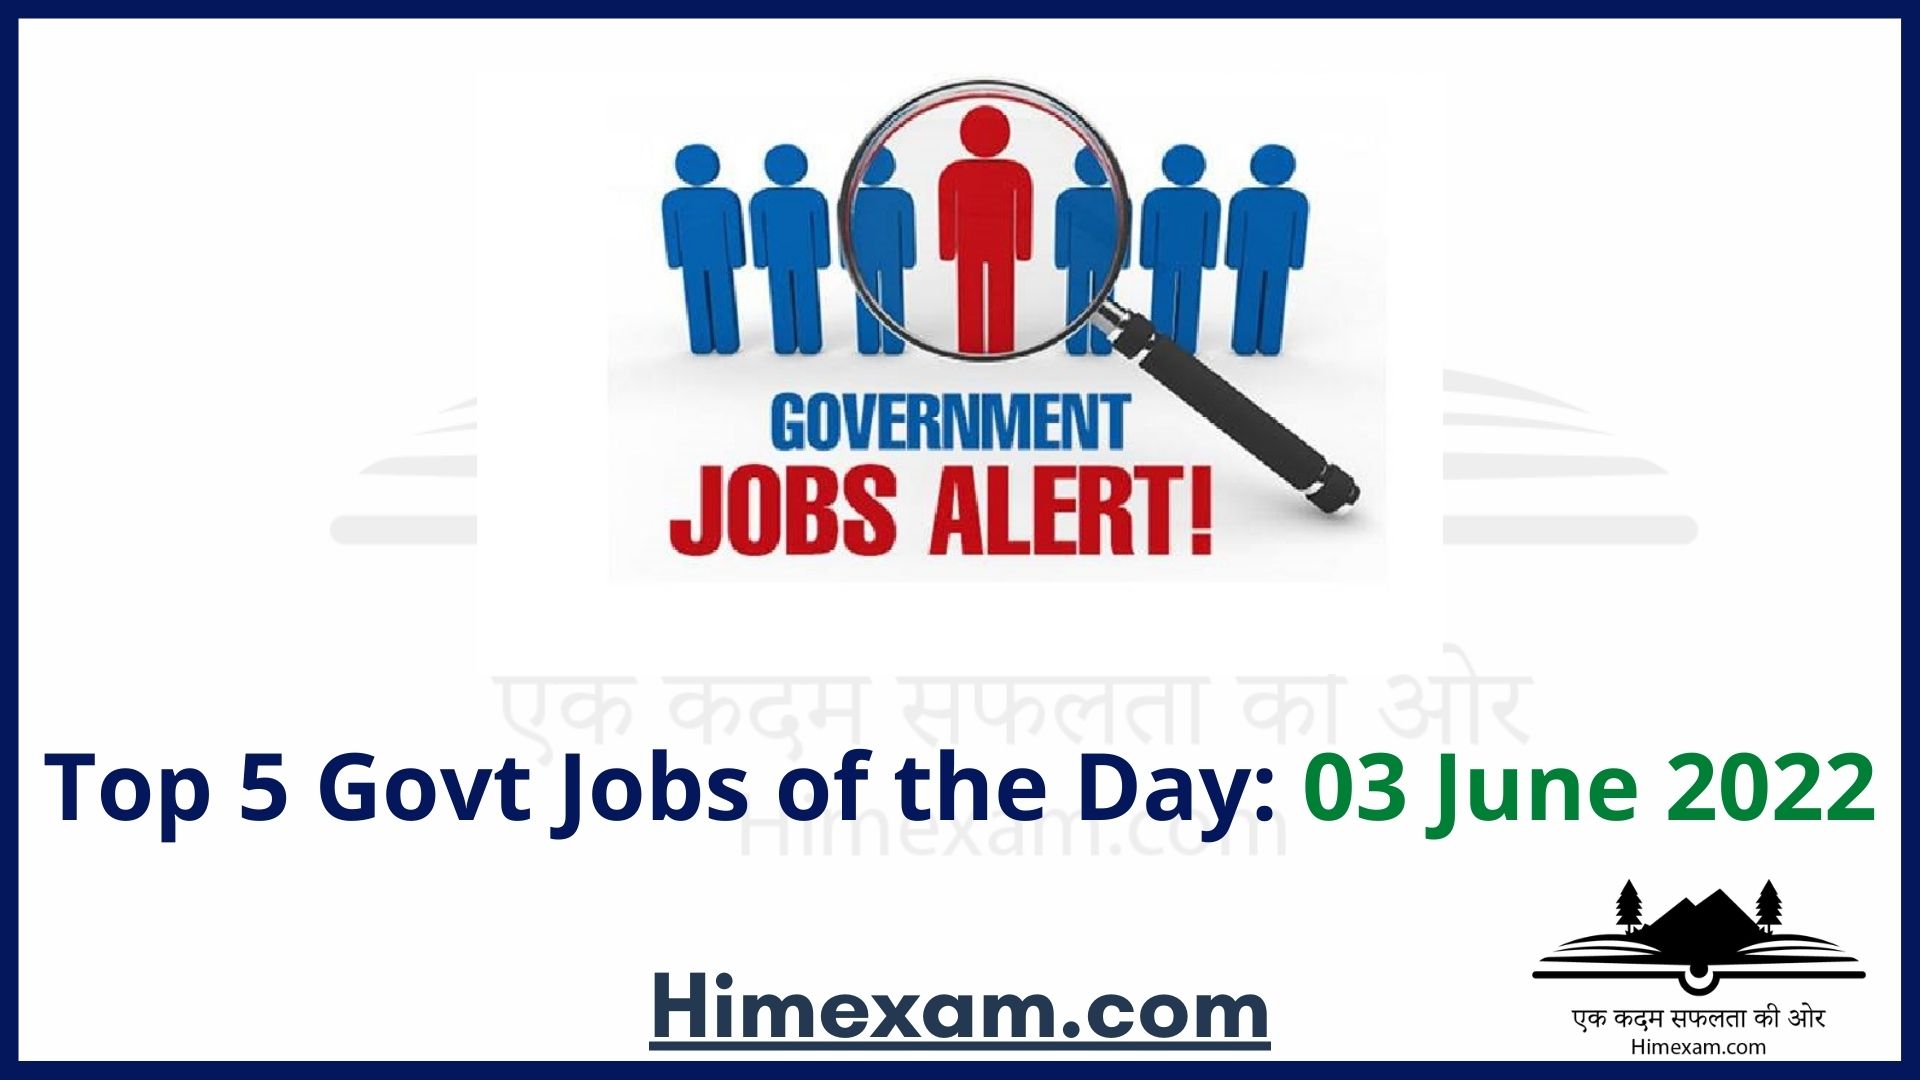 Top 5 Govt Jobs of the Day: 03 June 2022